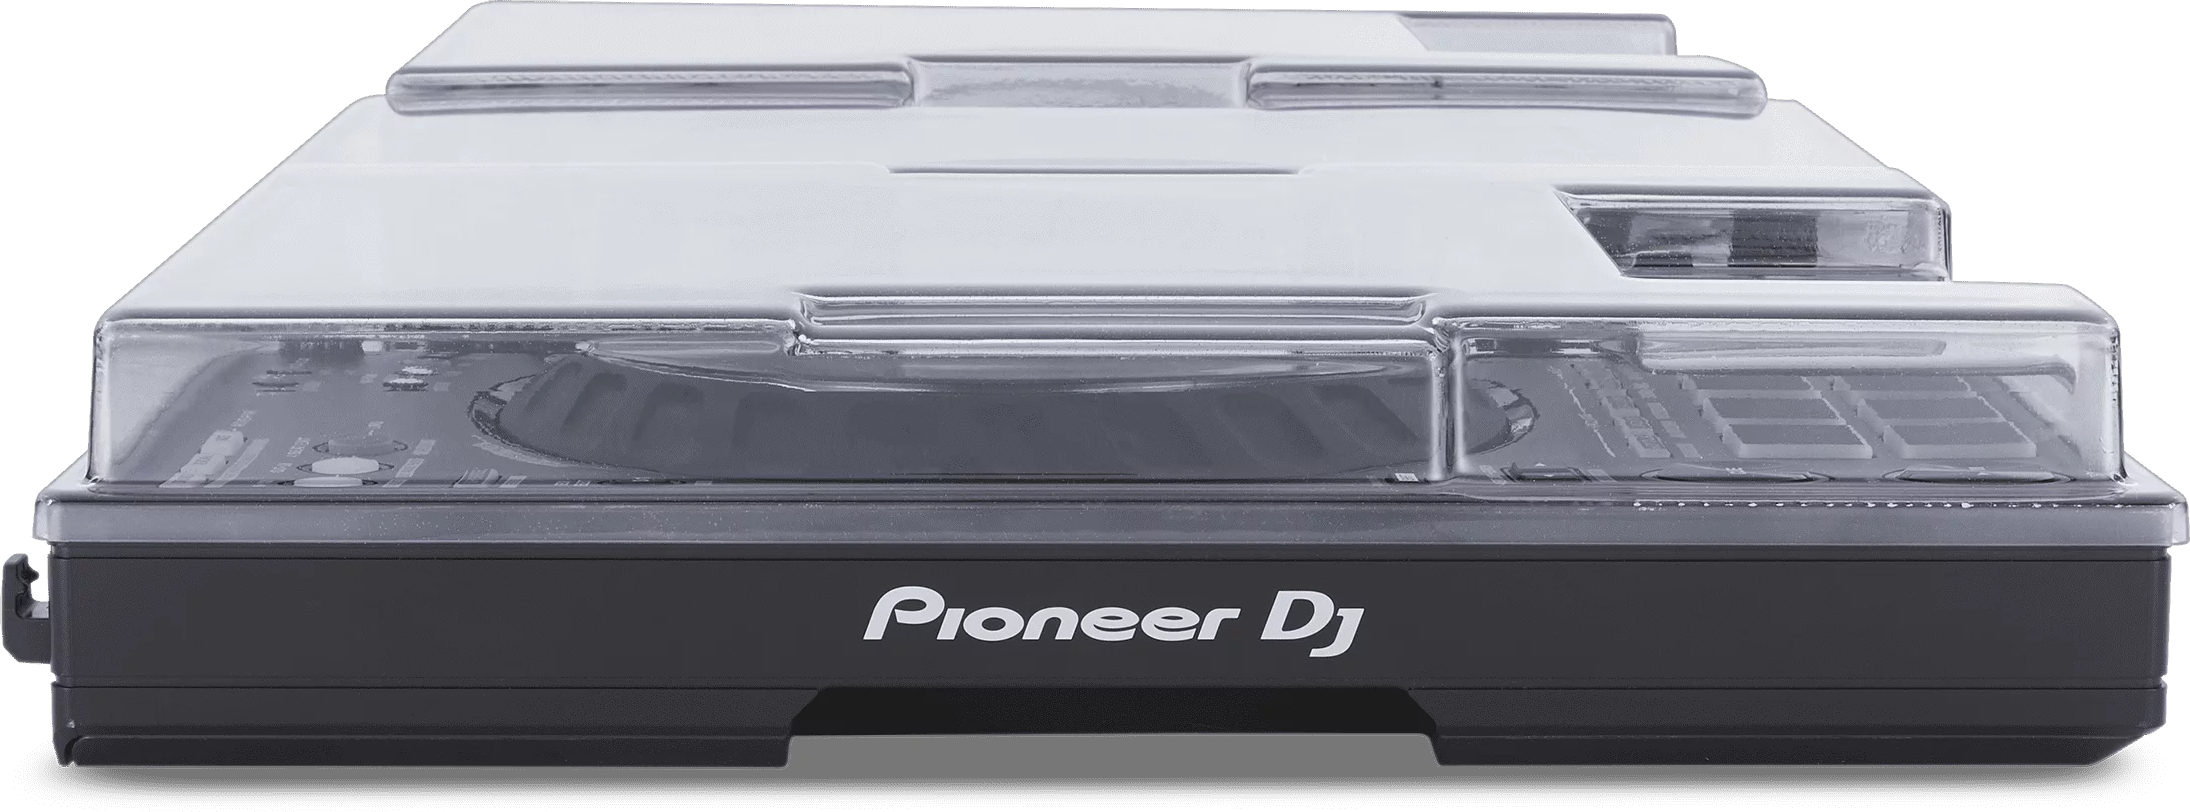 Decksaver Pioneer Dj Ddj-flx10 - Funda DJ - Variation 1